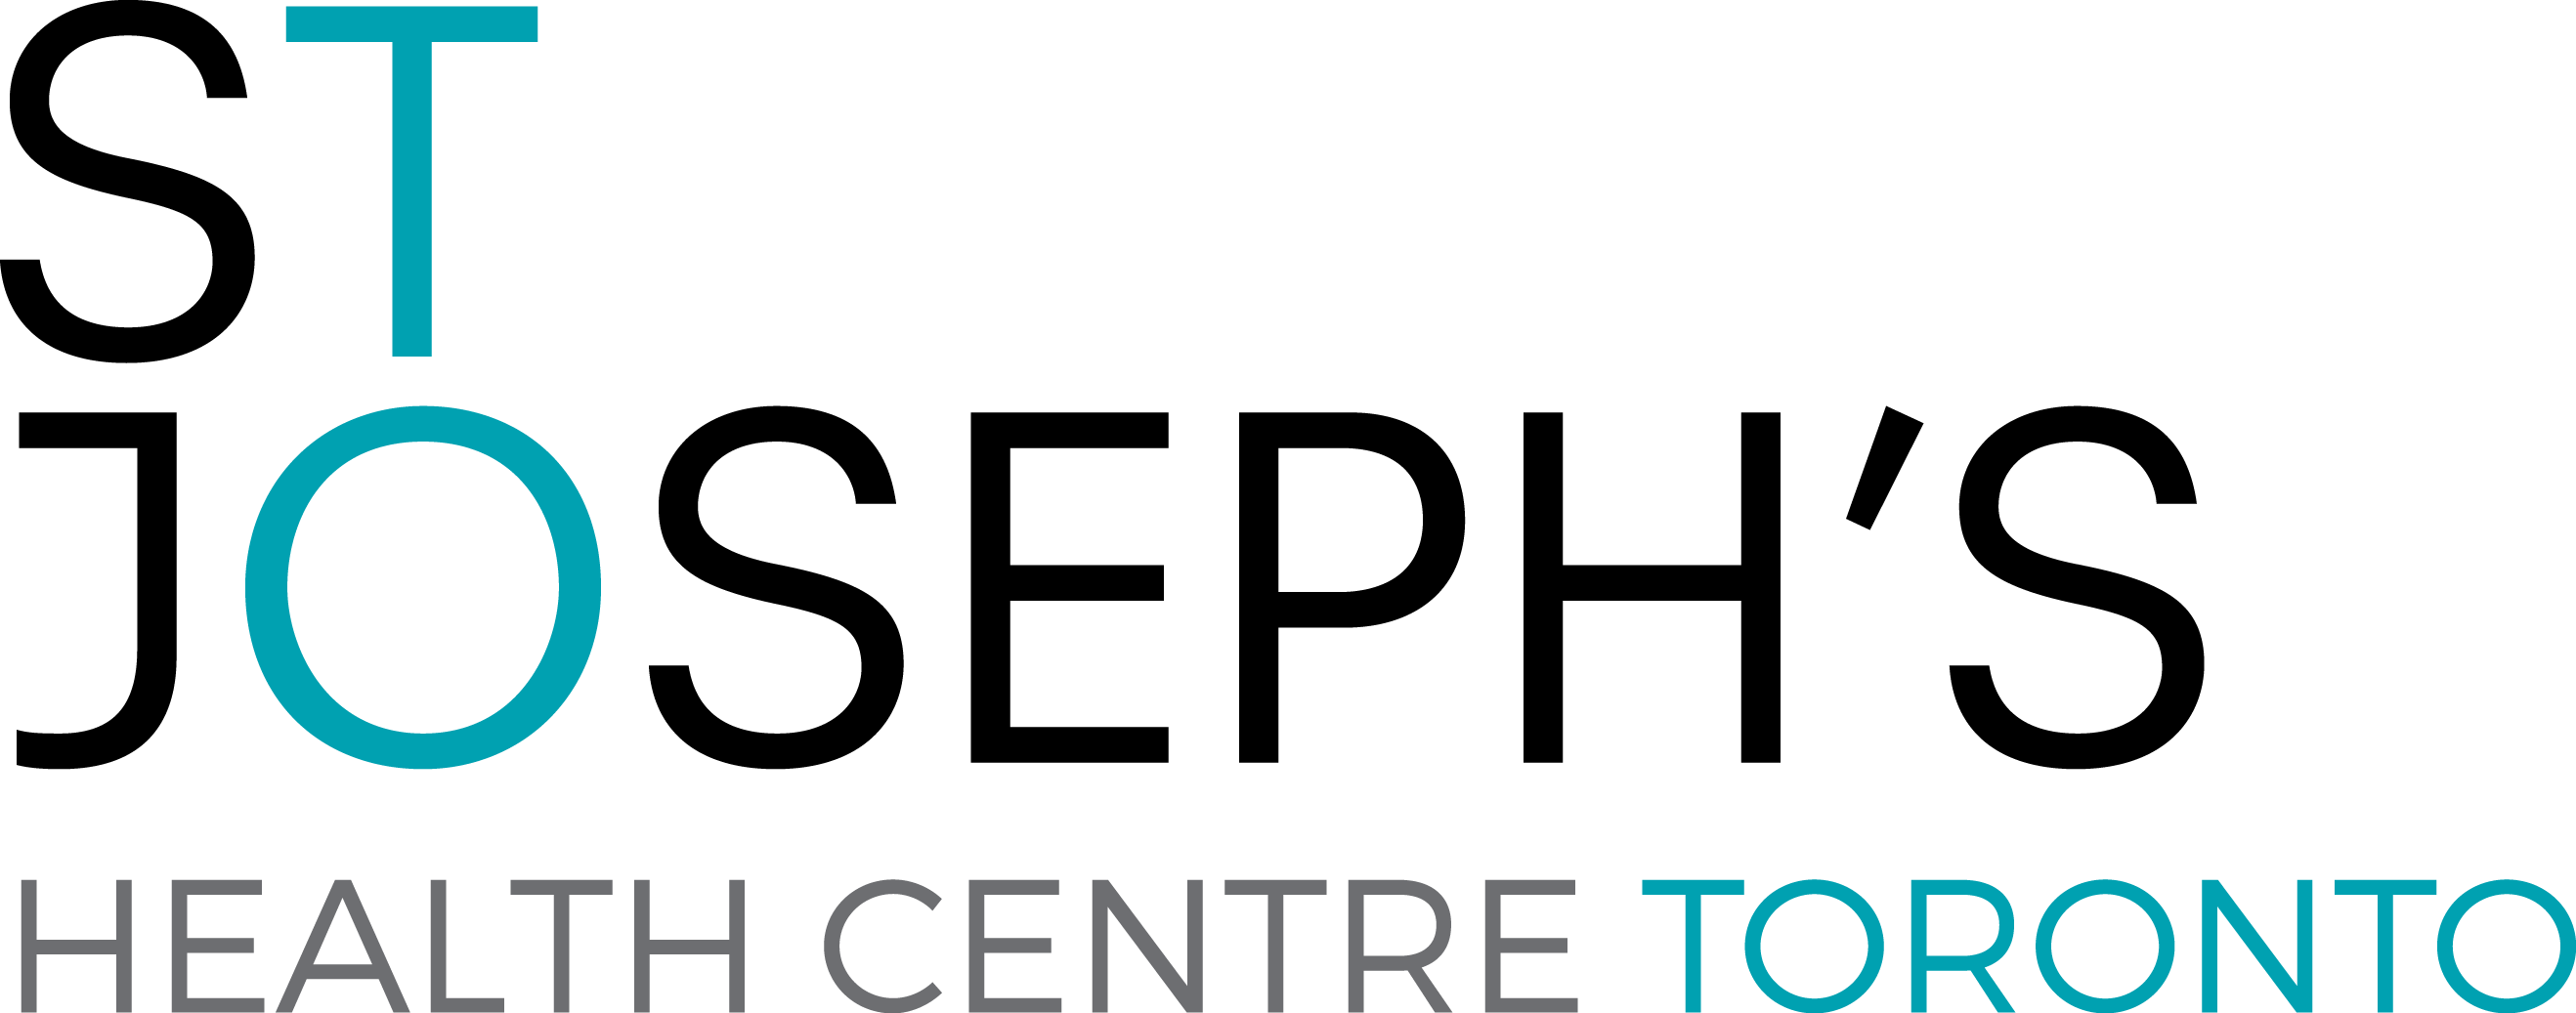 St Joseph's Health Centre logo